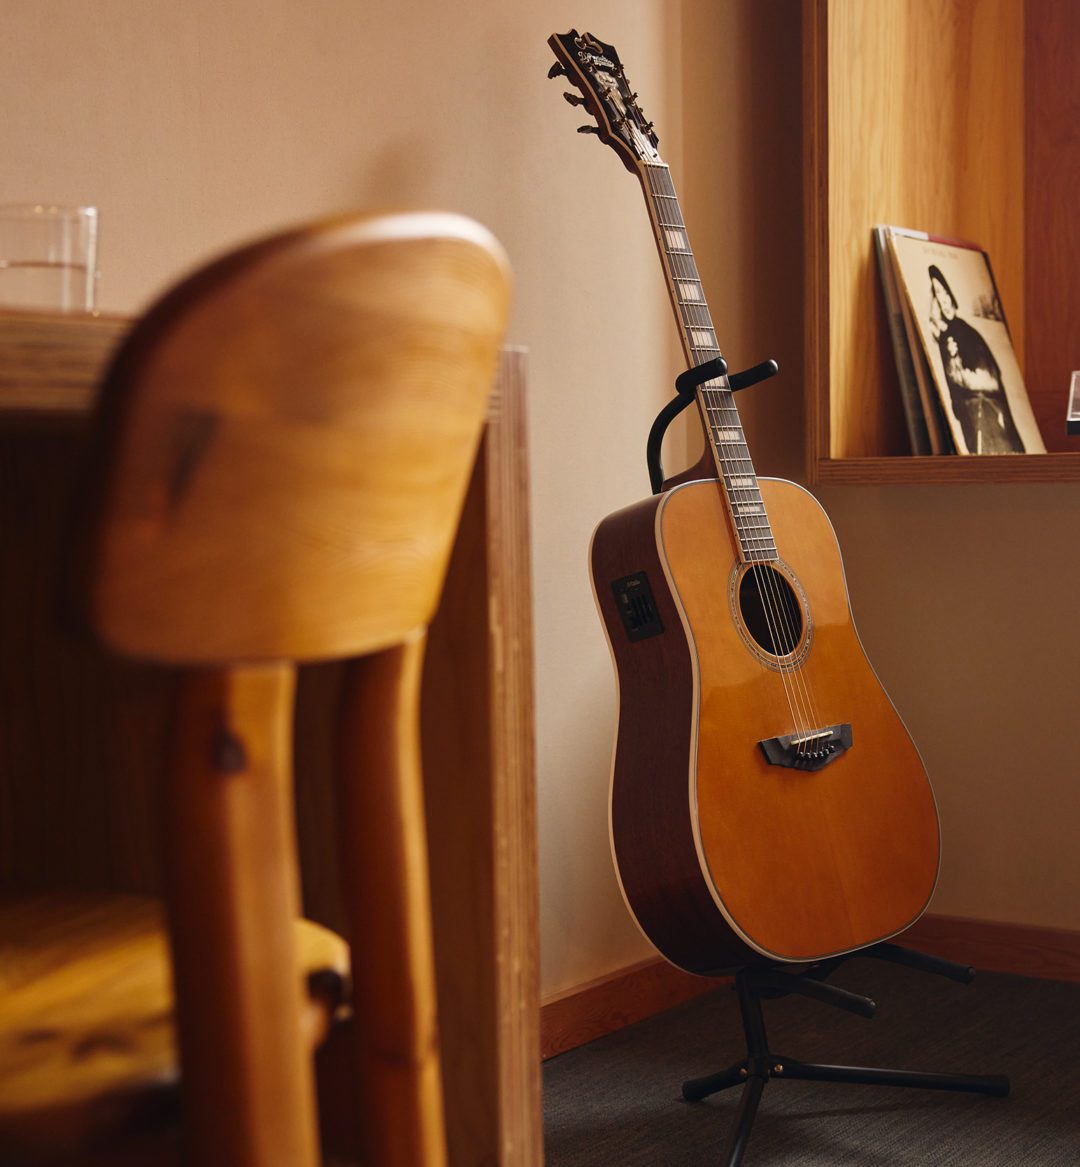 a desk and a guitar